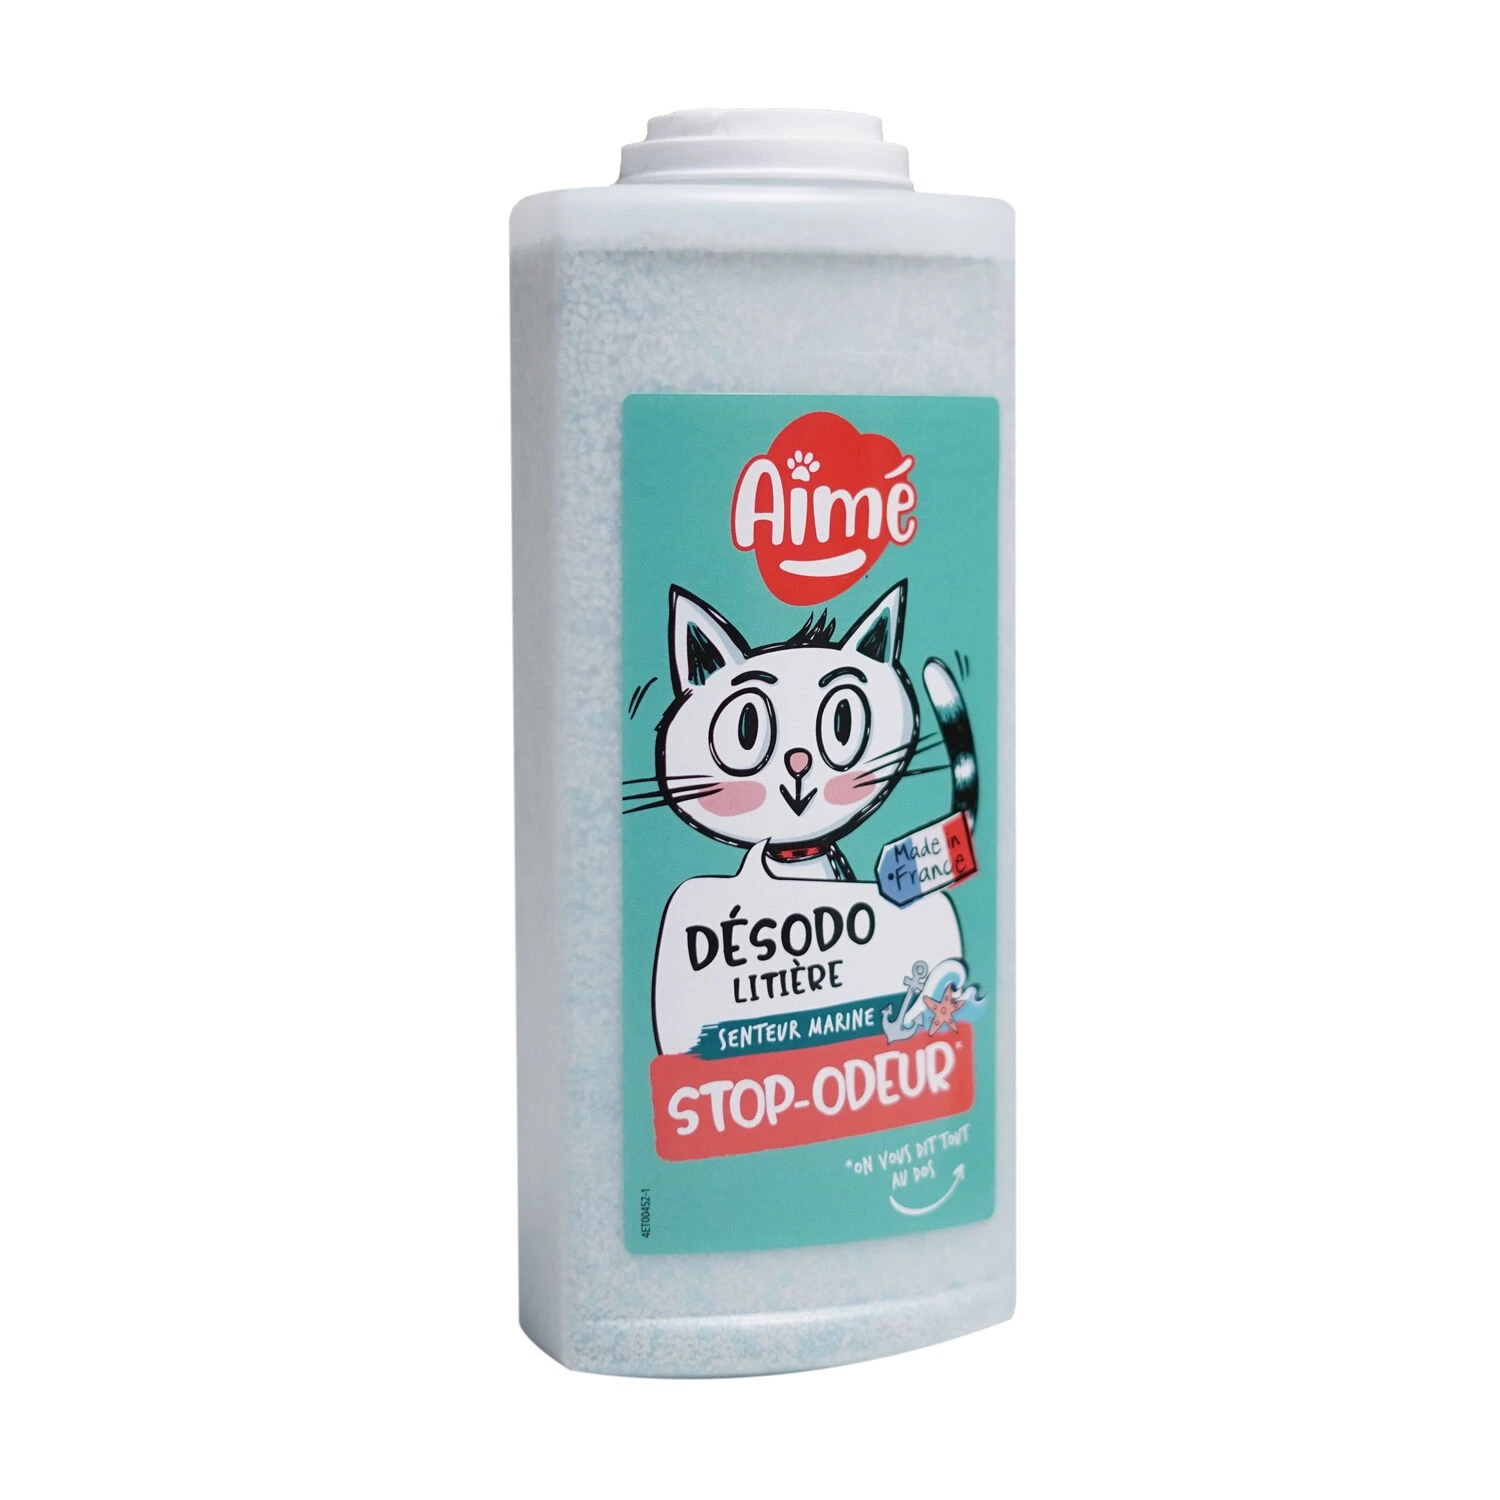 Desodorierungsmittel für Katzenstreu, stoppt Gerüche - AimÉ